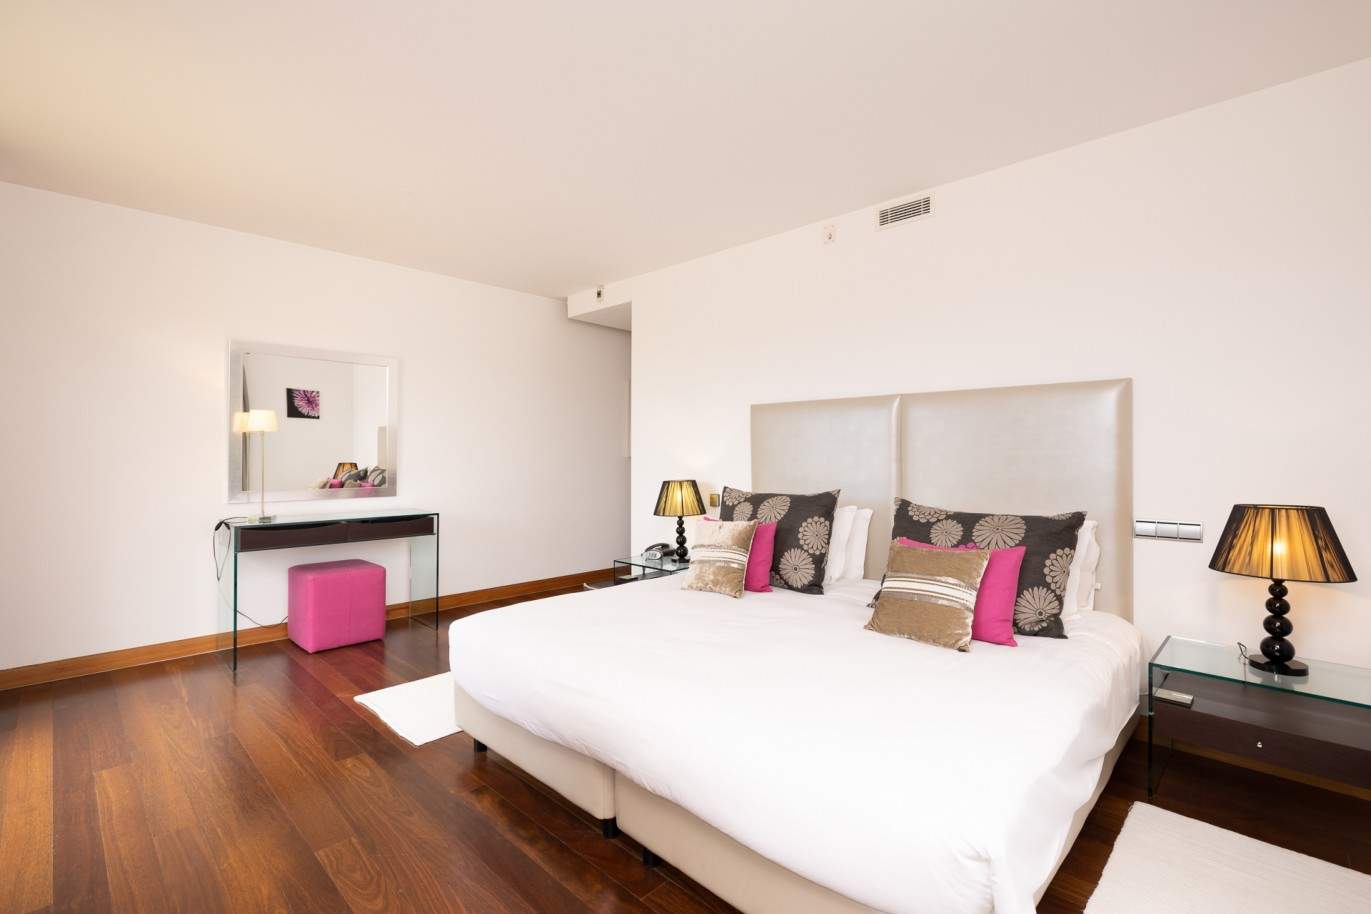 2 bedroom apartment with pool, for sale in Vale do Lobo, Algarve_207394